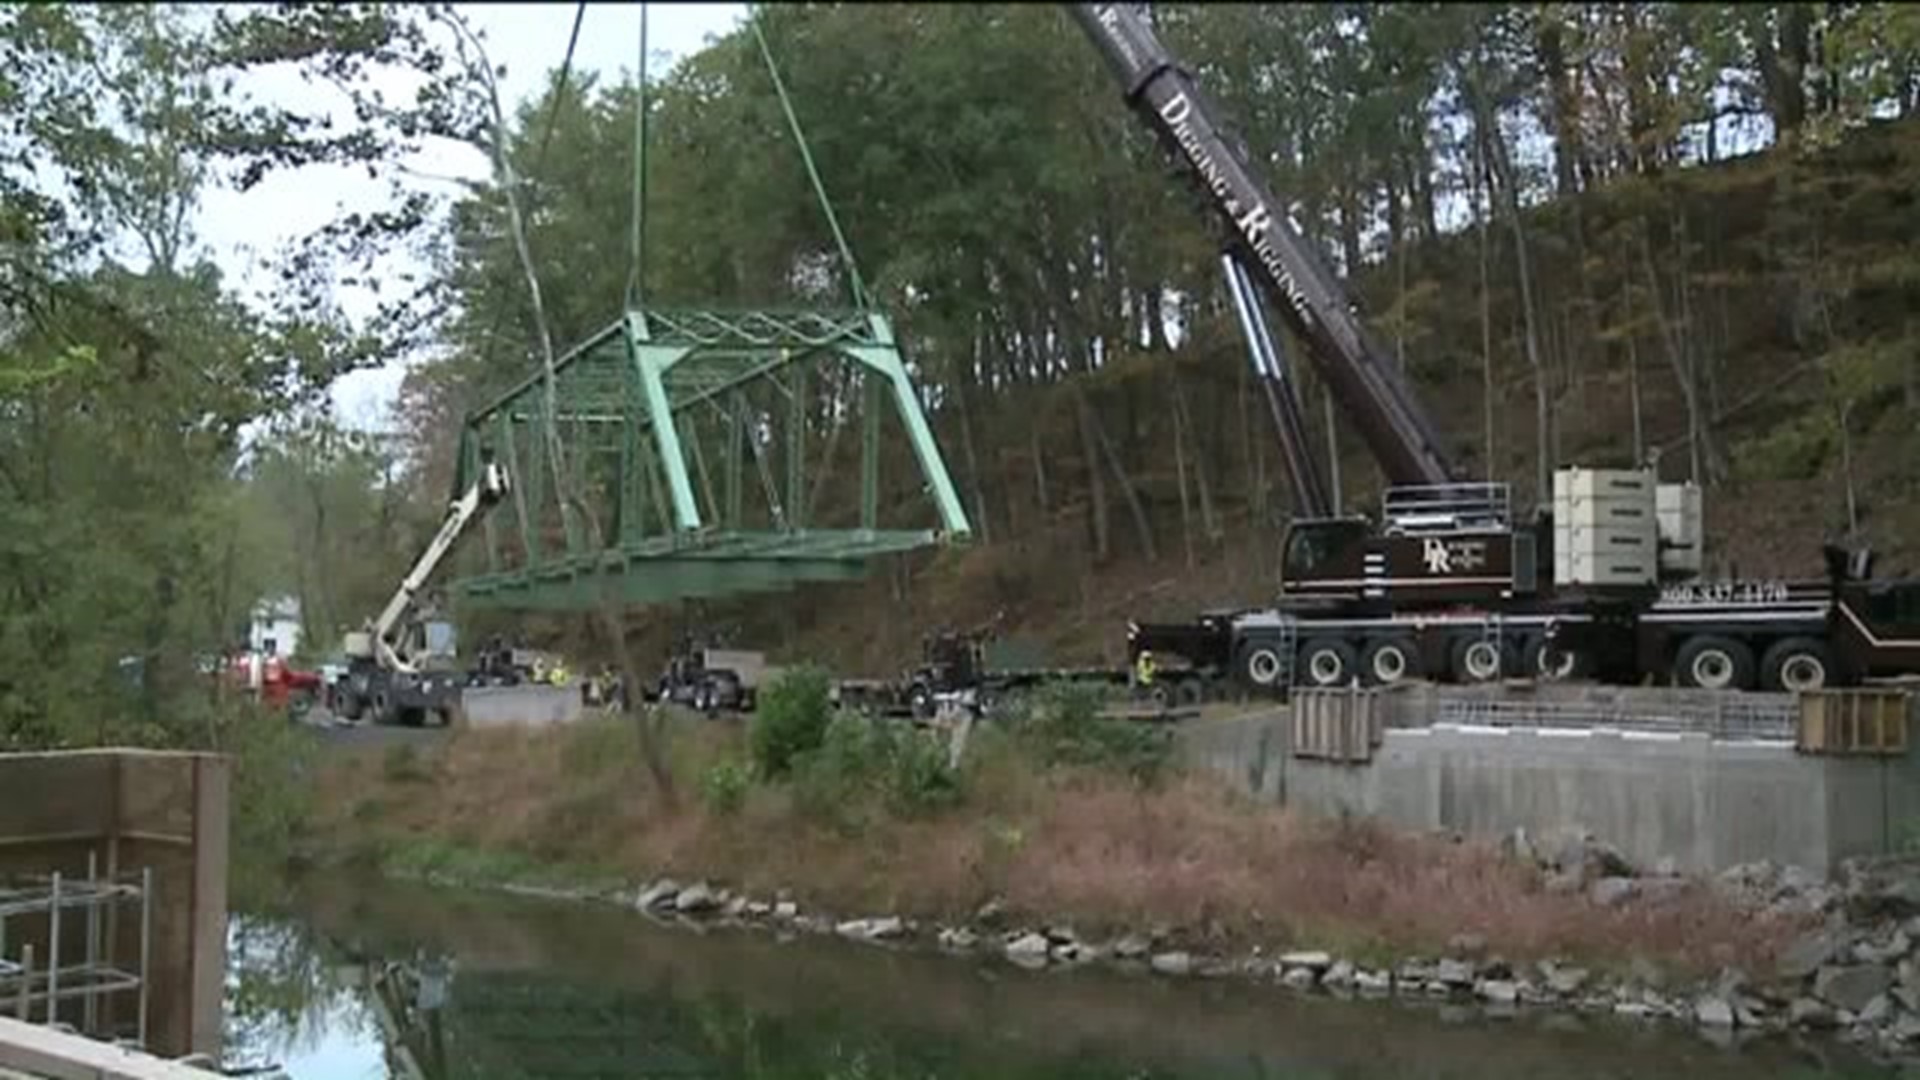 Crews Use Crane to Drop New Bridge in Place